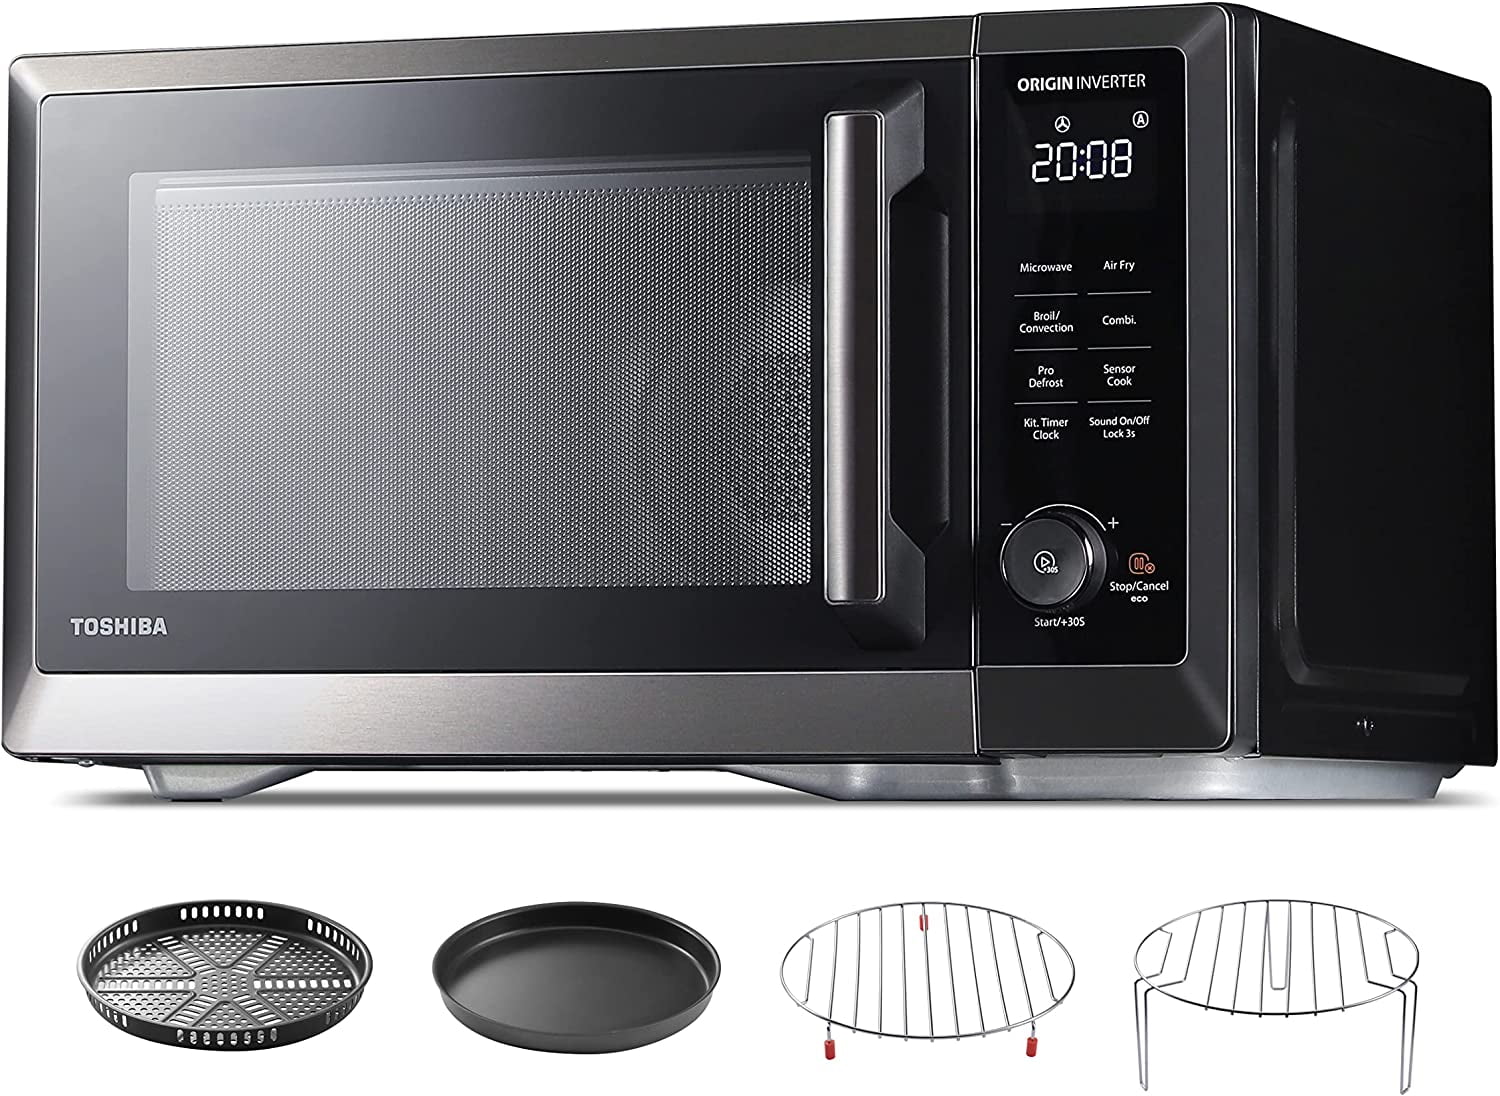 Sur La Table Microwave Air Fryer Oven - appliances - by owner